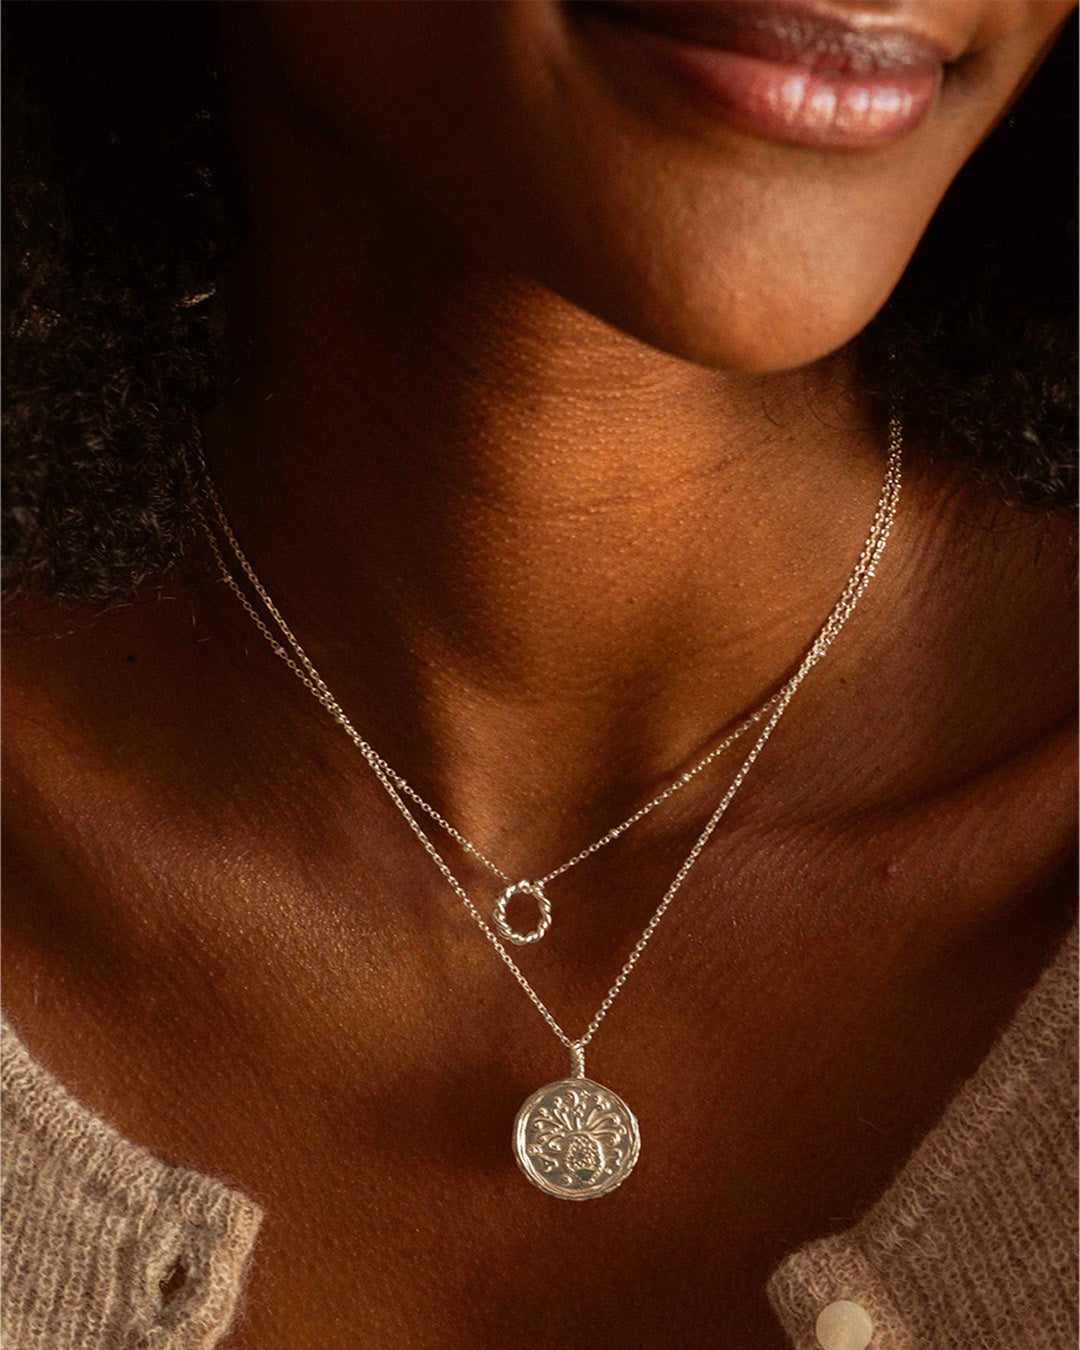 Gabrielle silver necklace